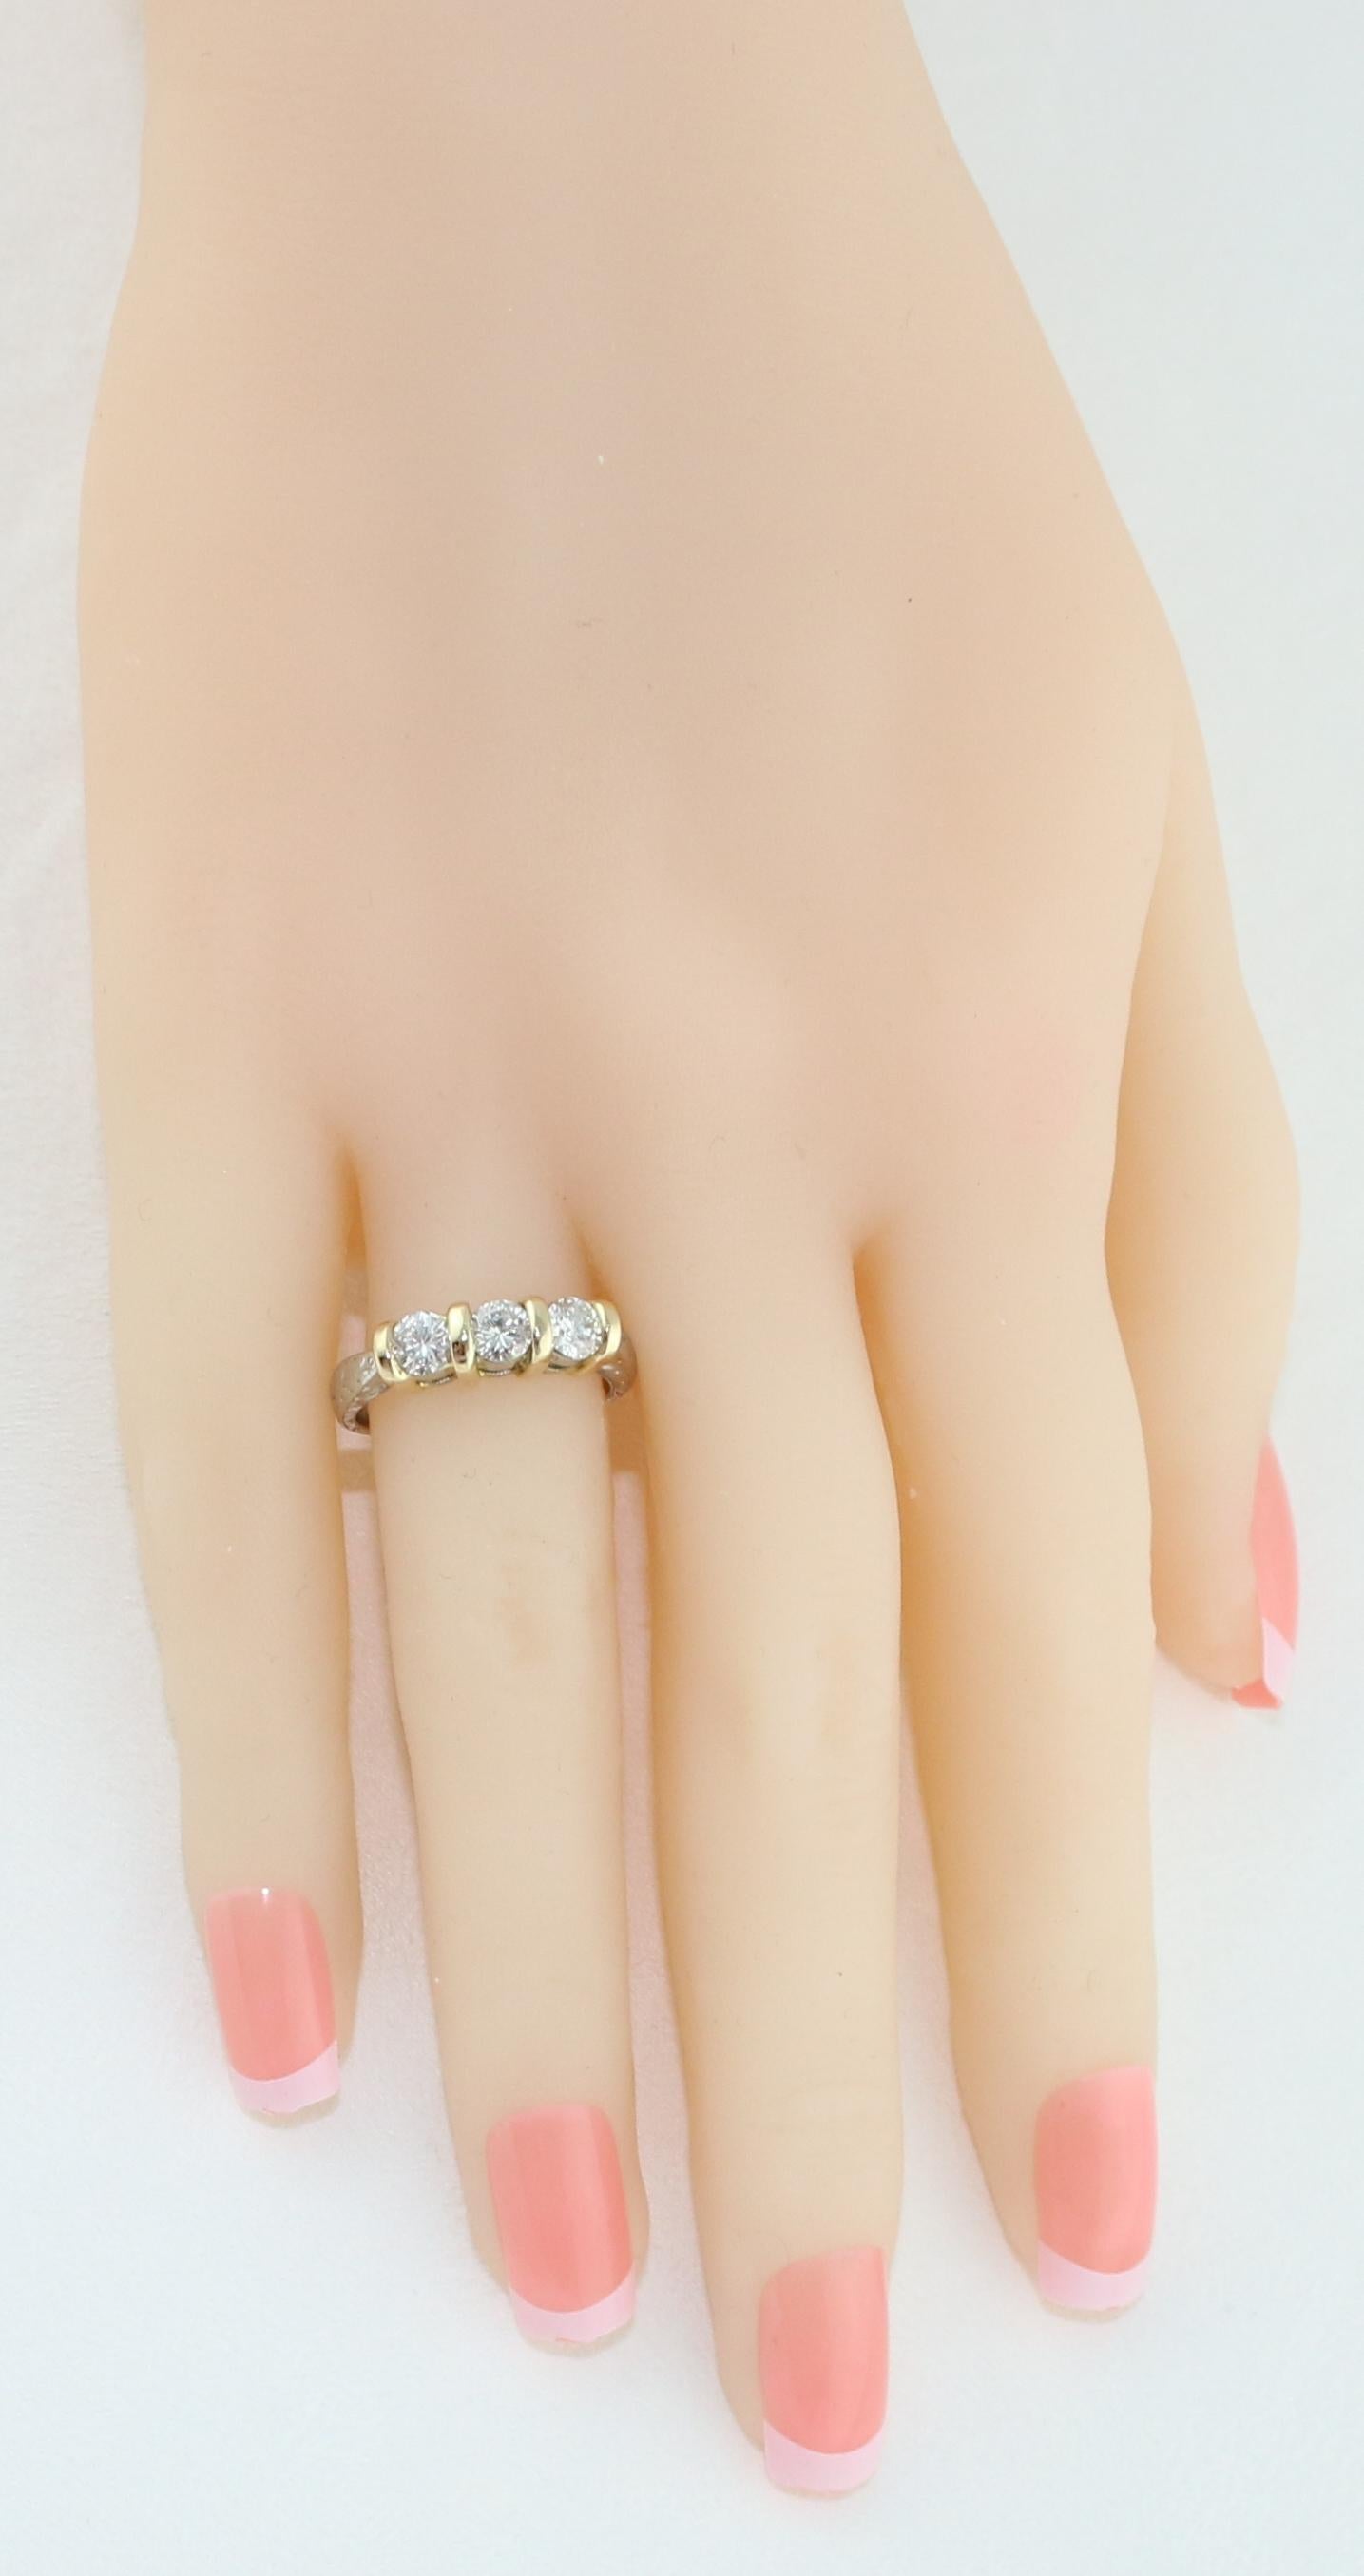 3 diamond ring design